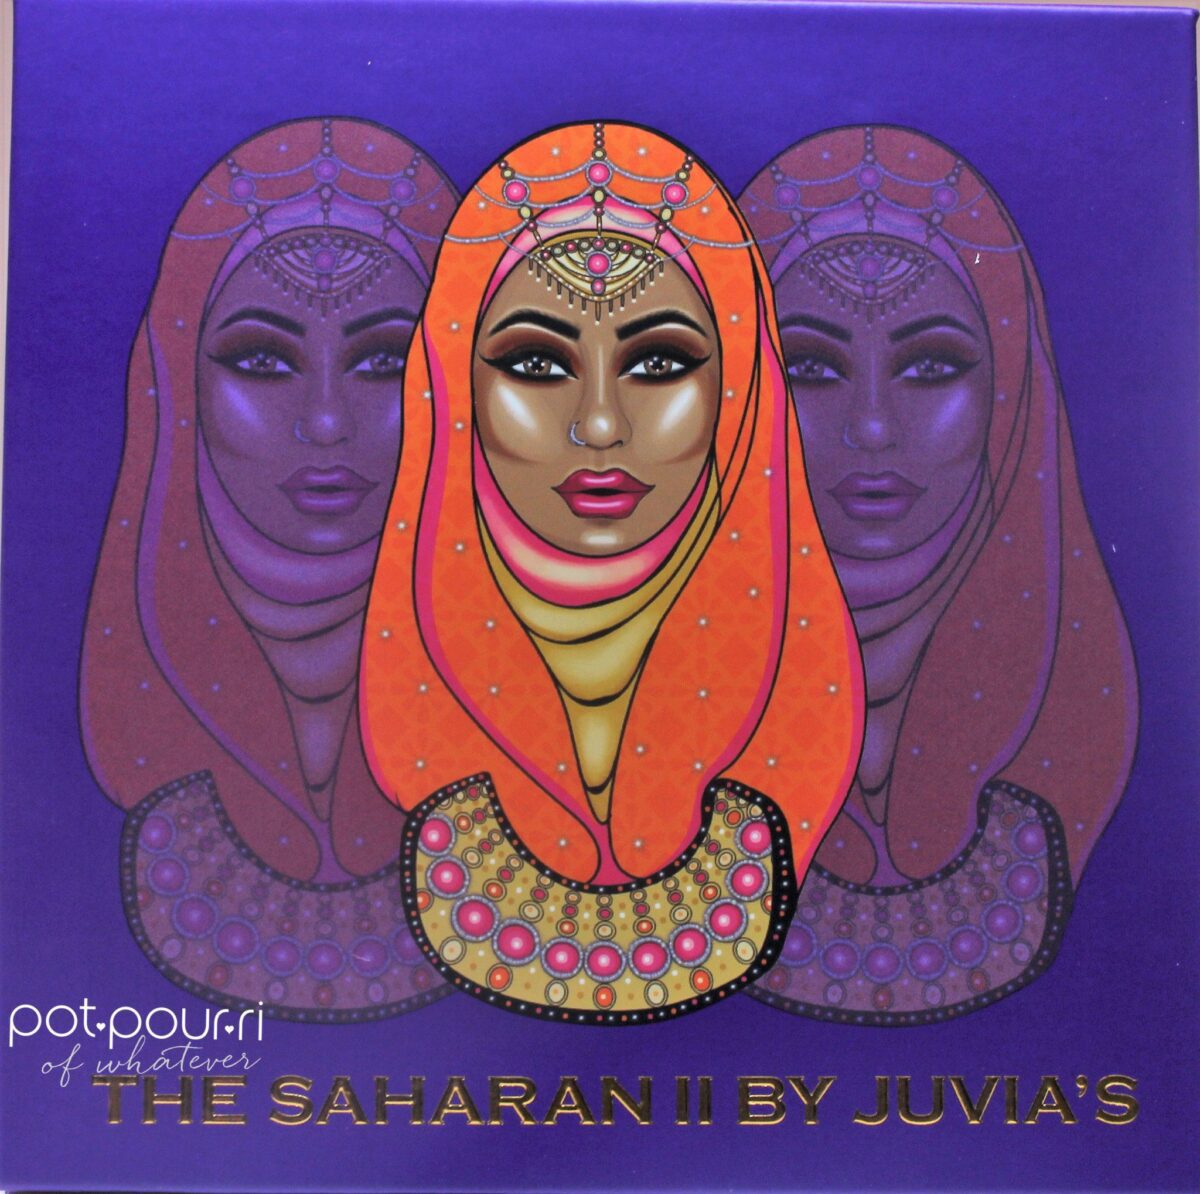 The Saharan 11 Eyeshadow Palette is oversized